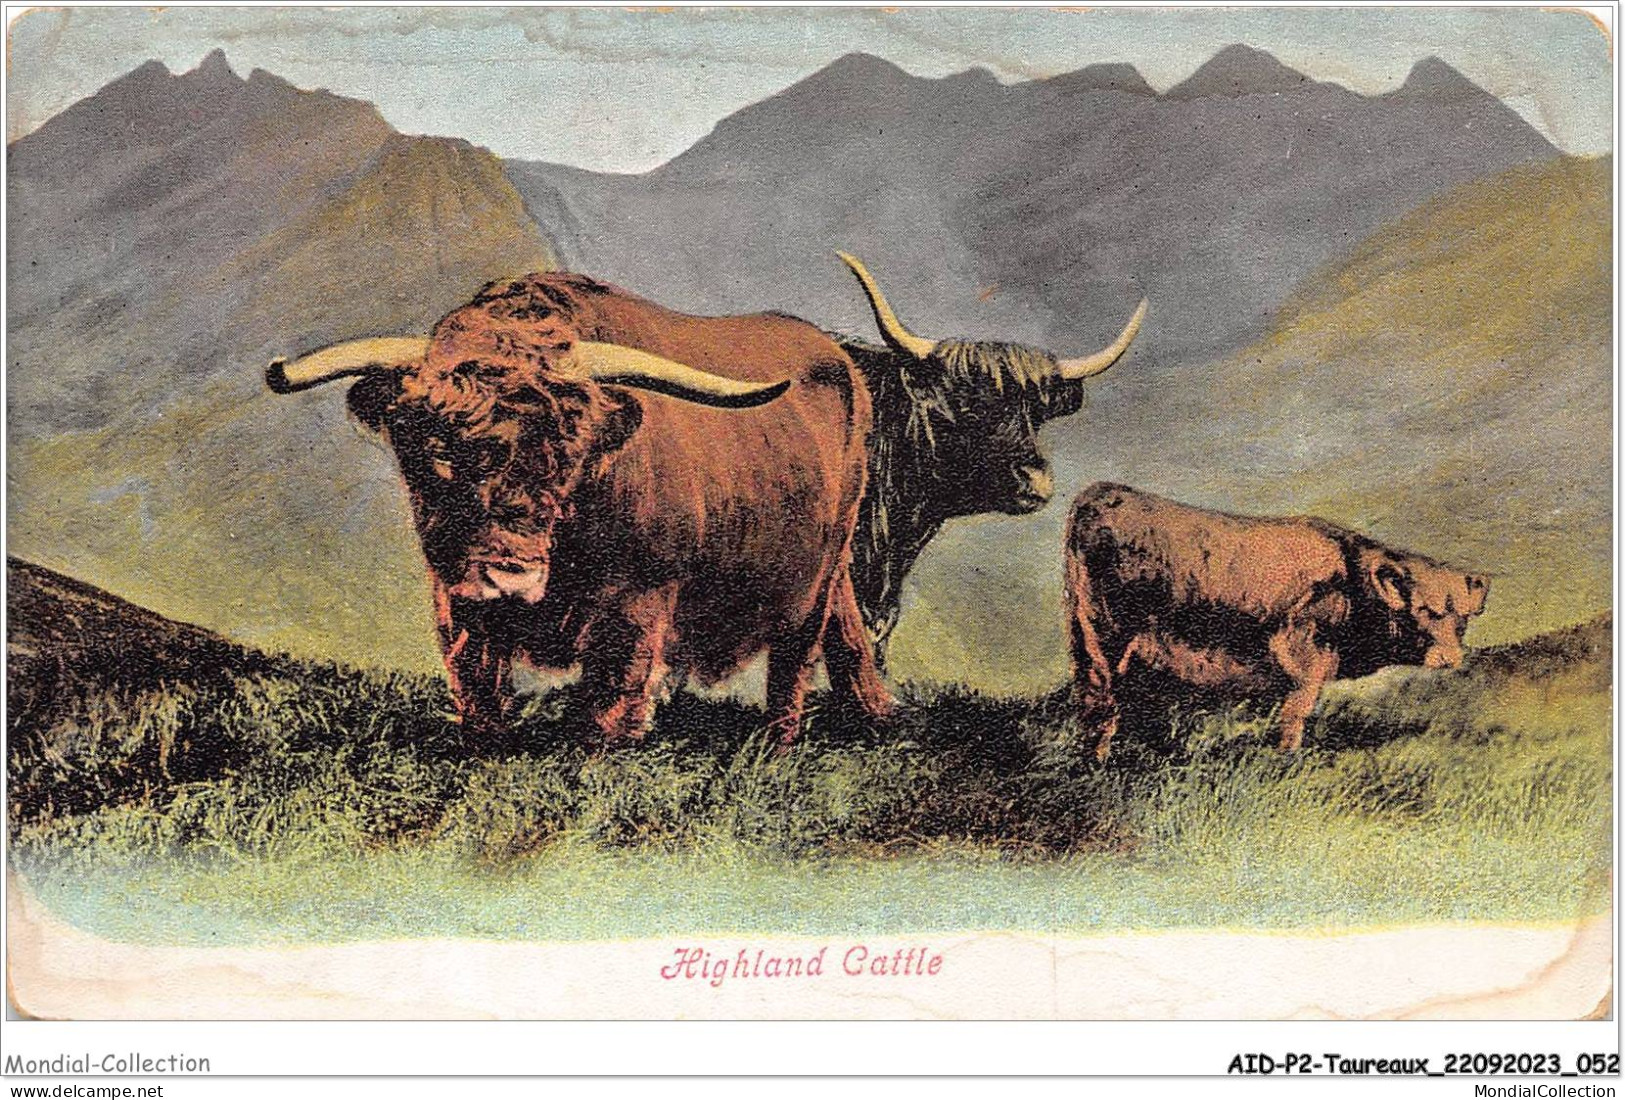 AIDP2-TAUREAUX-0100 - Highland Cattle  - Taureaux